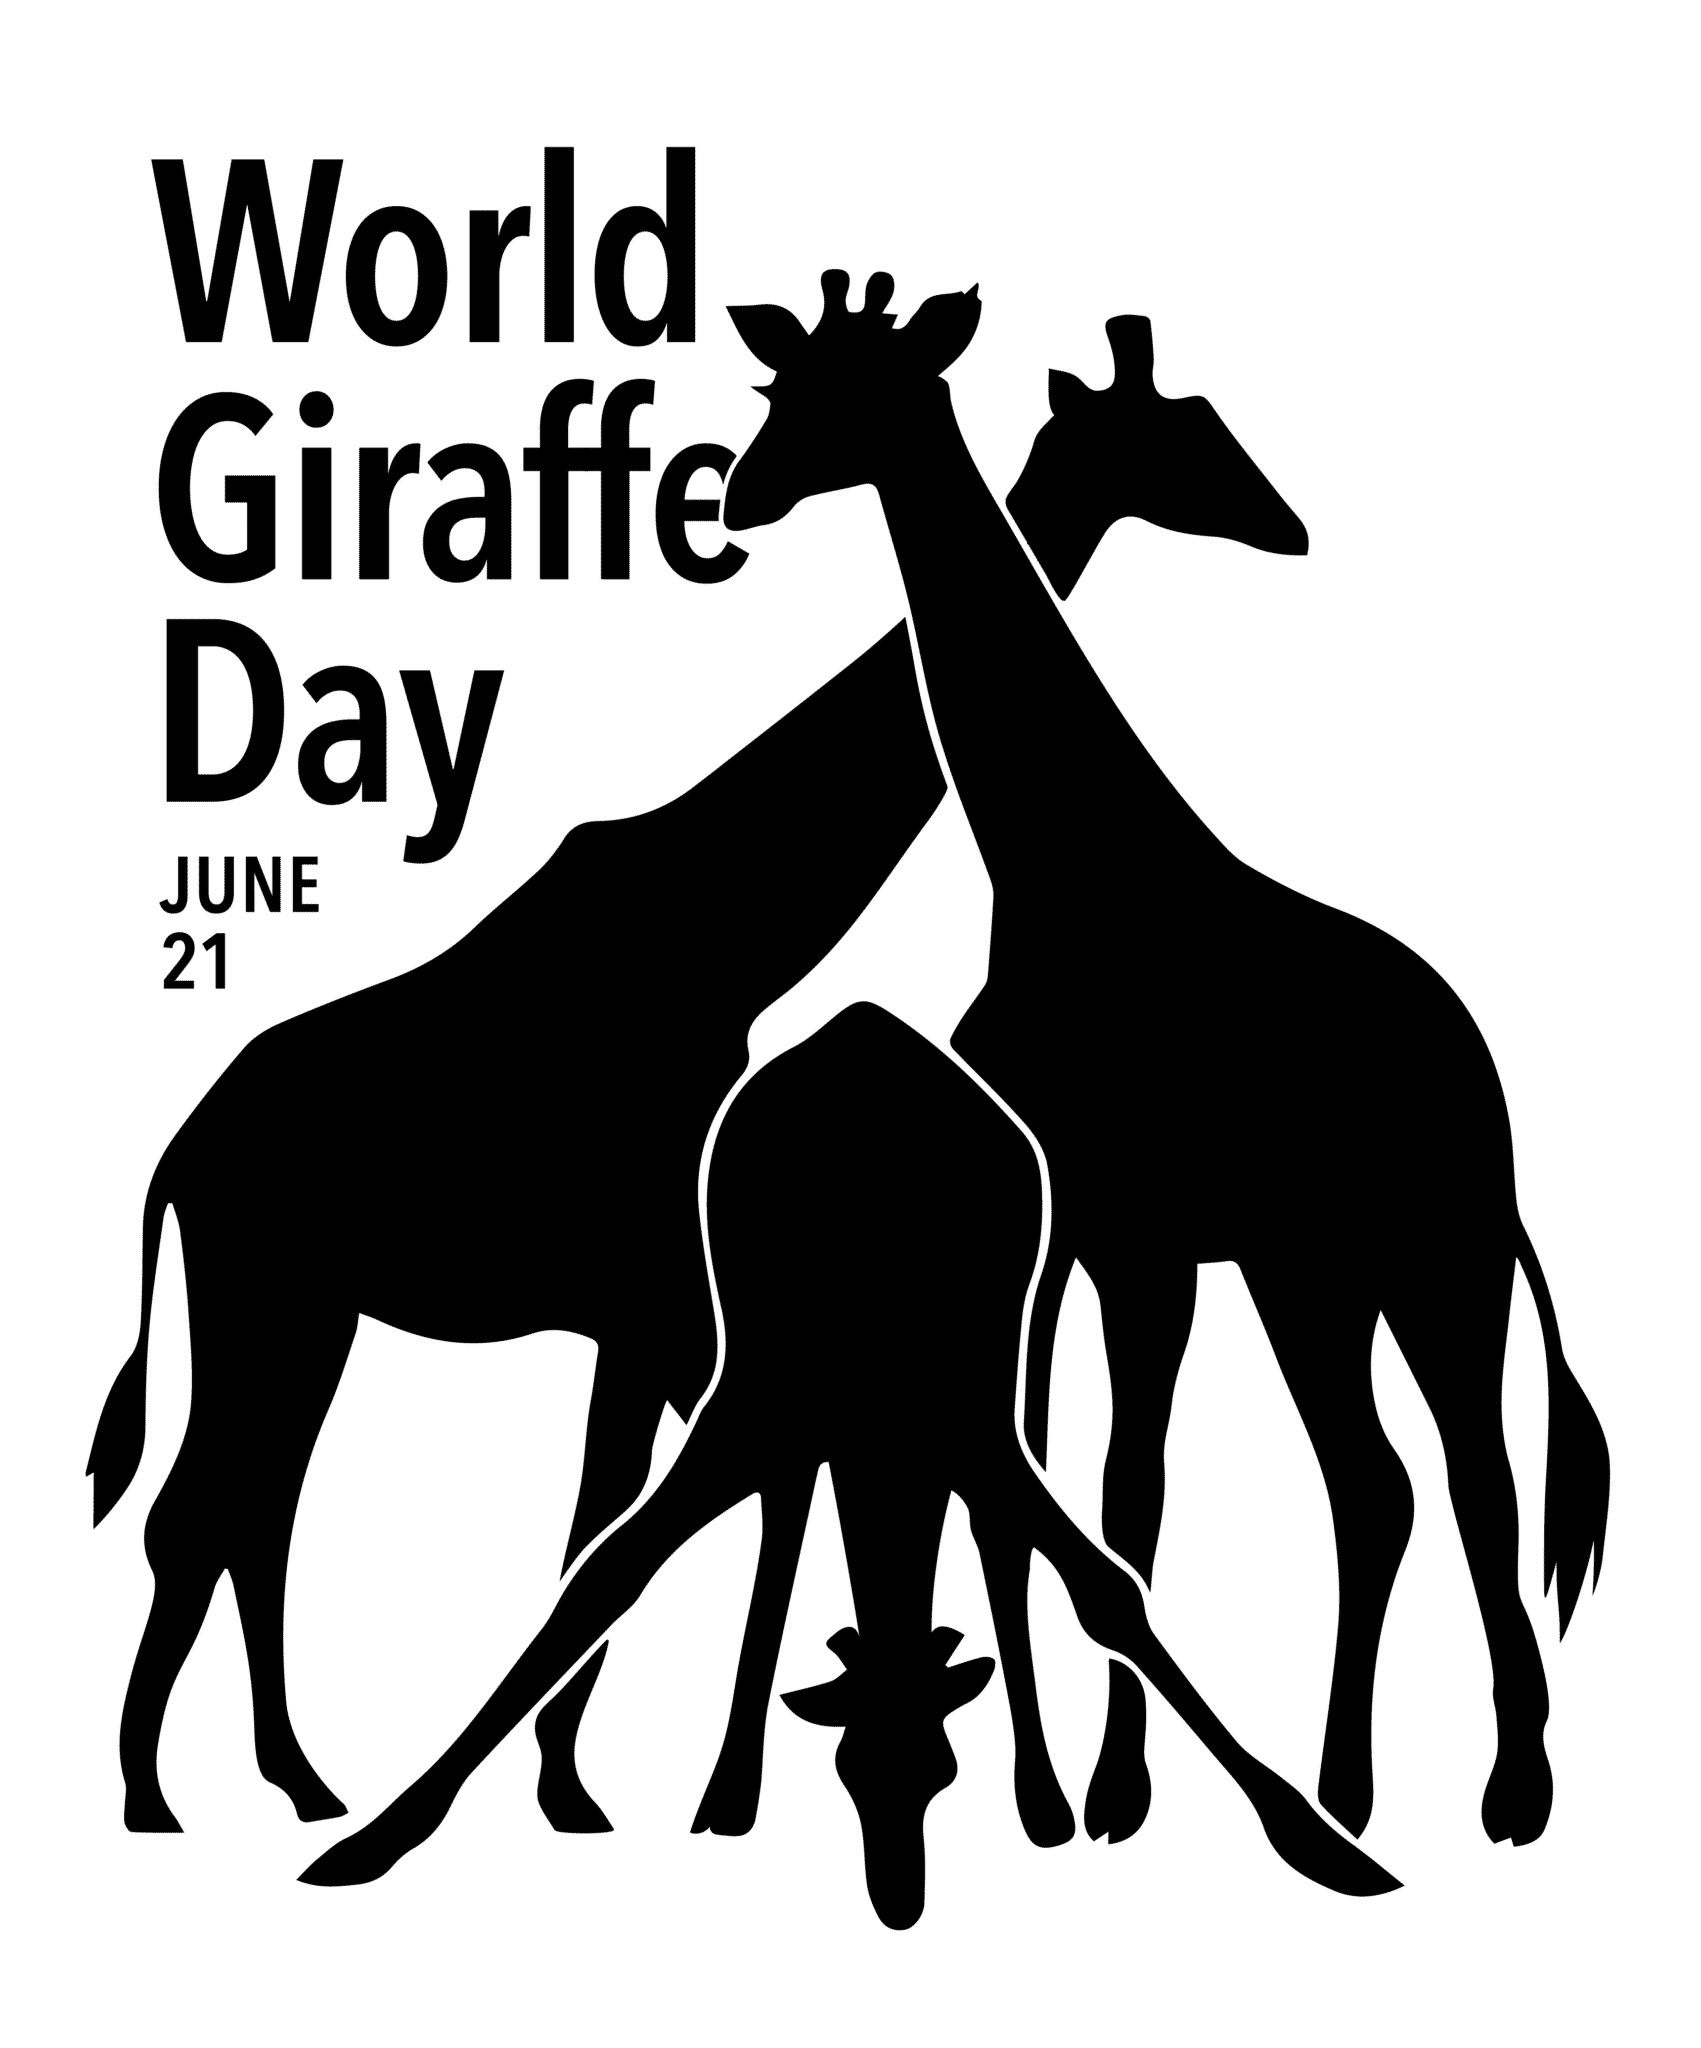 Today is World Giraffe Day! Giraffe Conservation Foundation